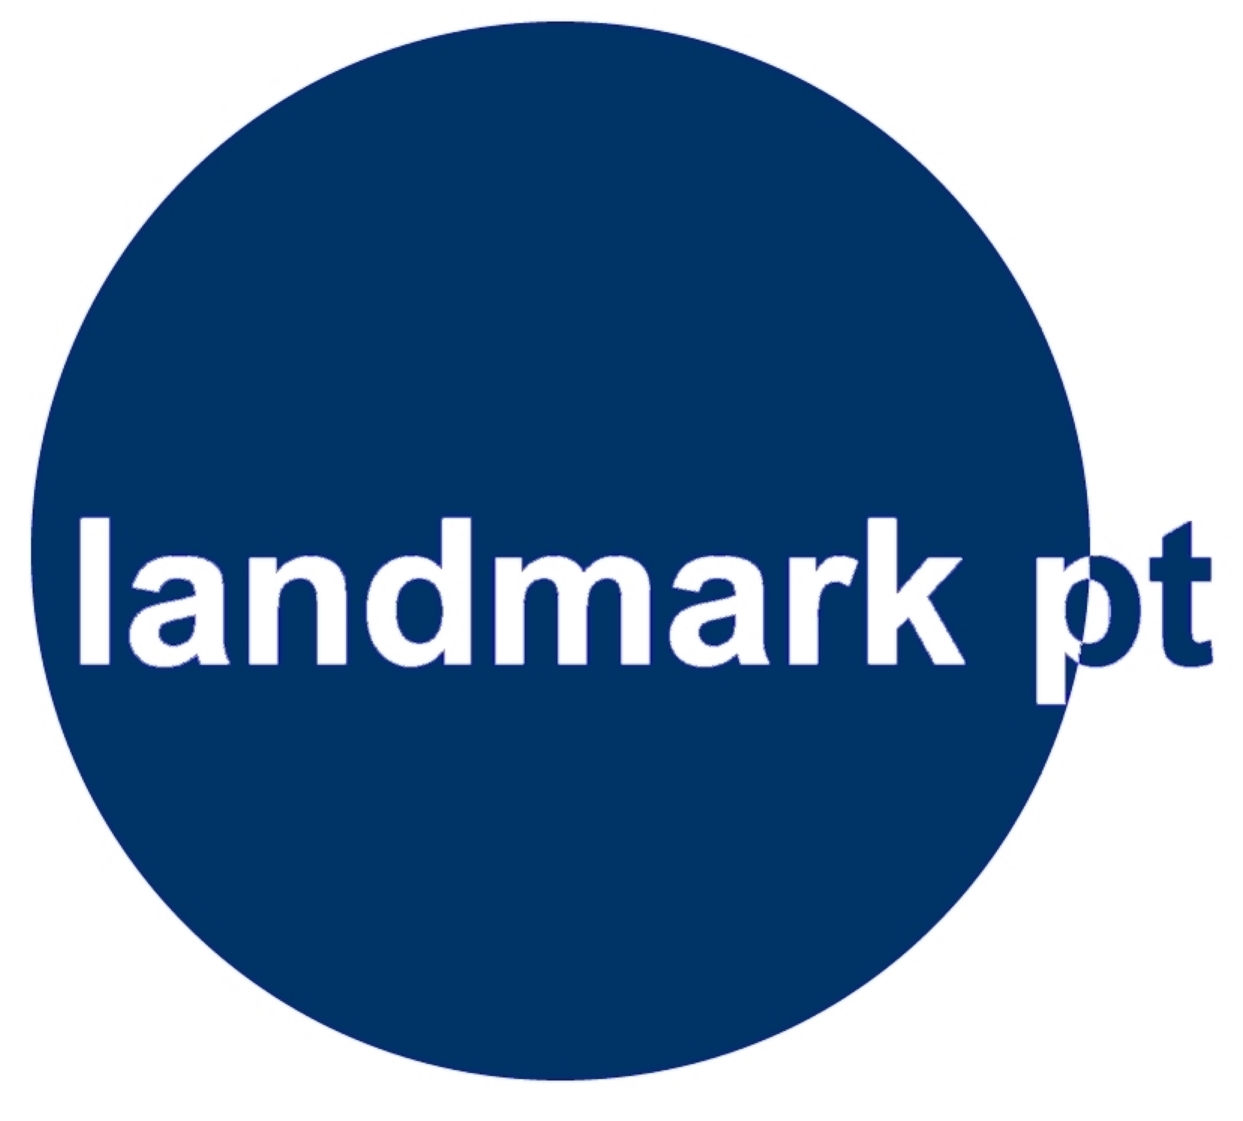 Landmark PT - Construction and Property VAT Advice